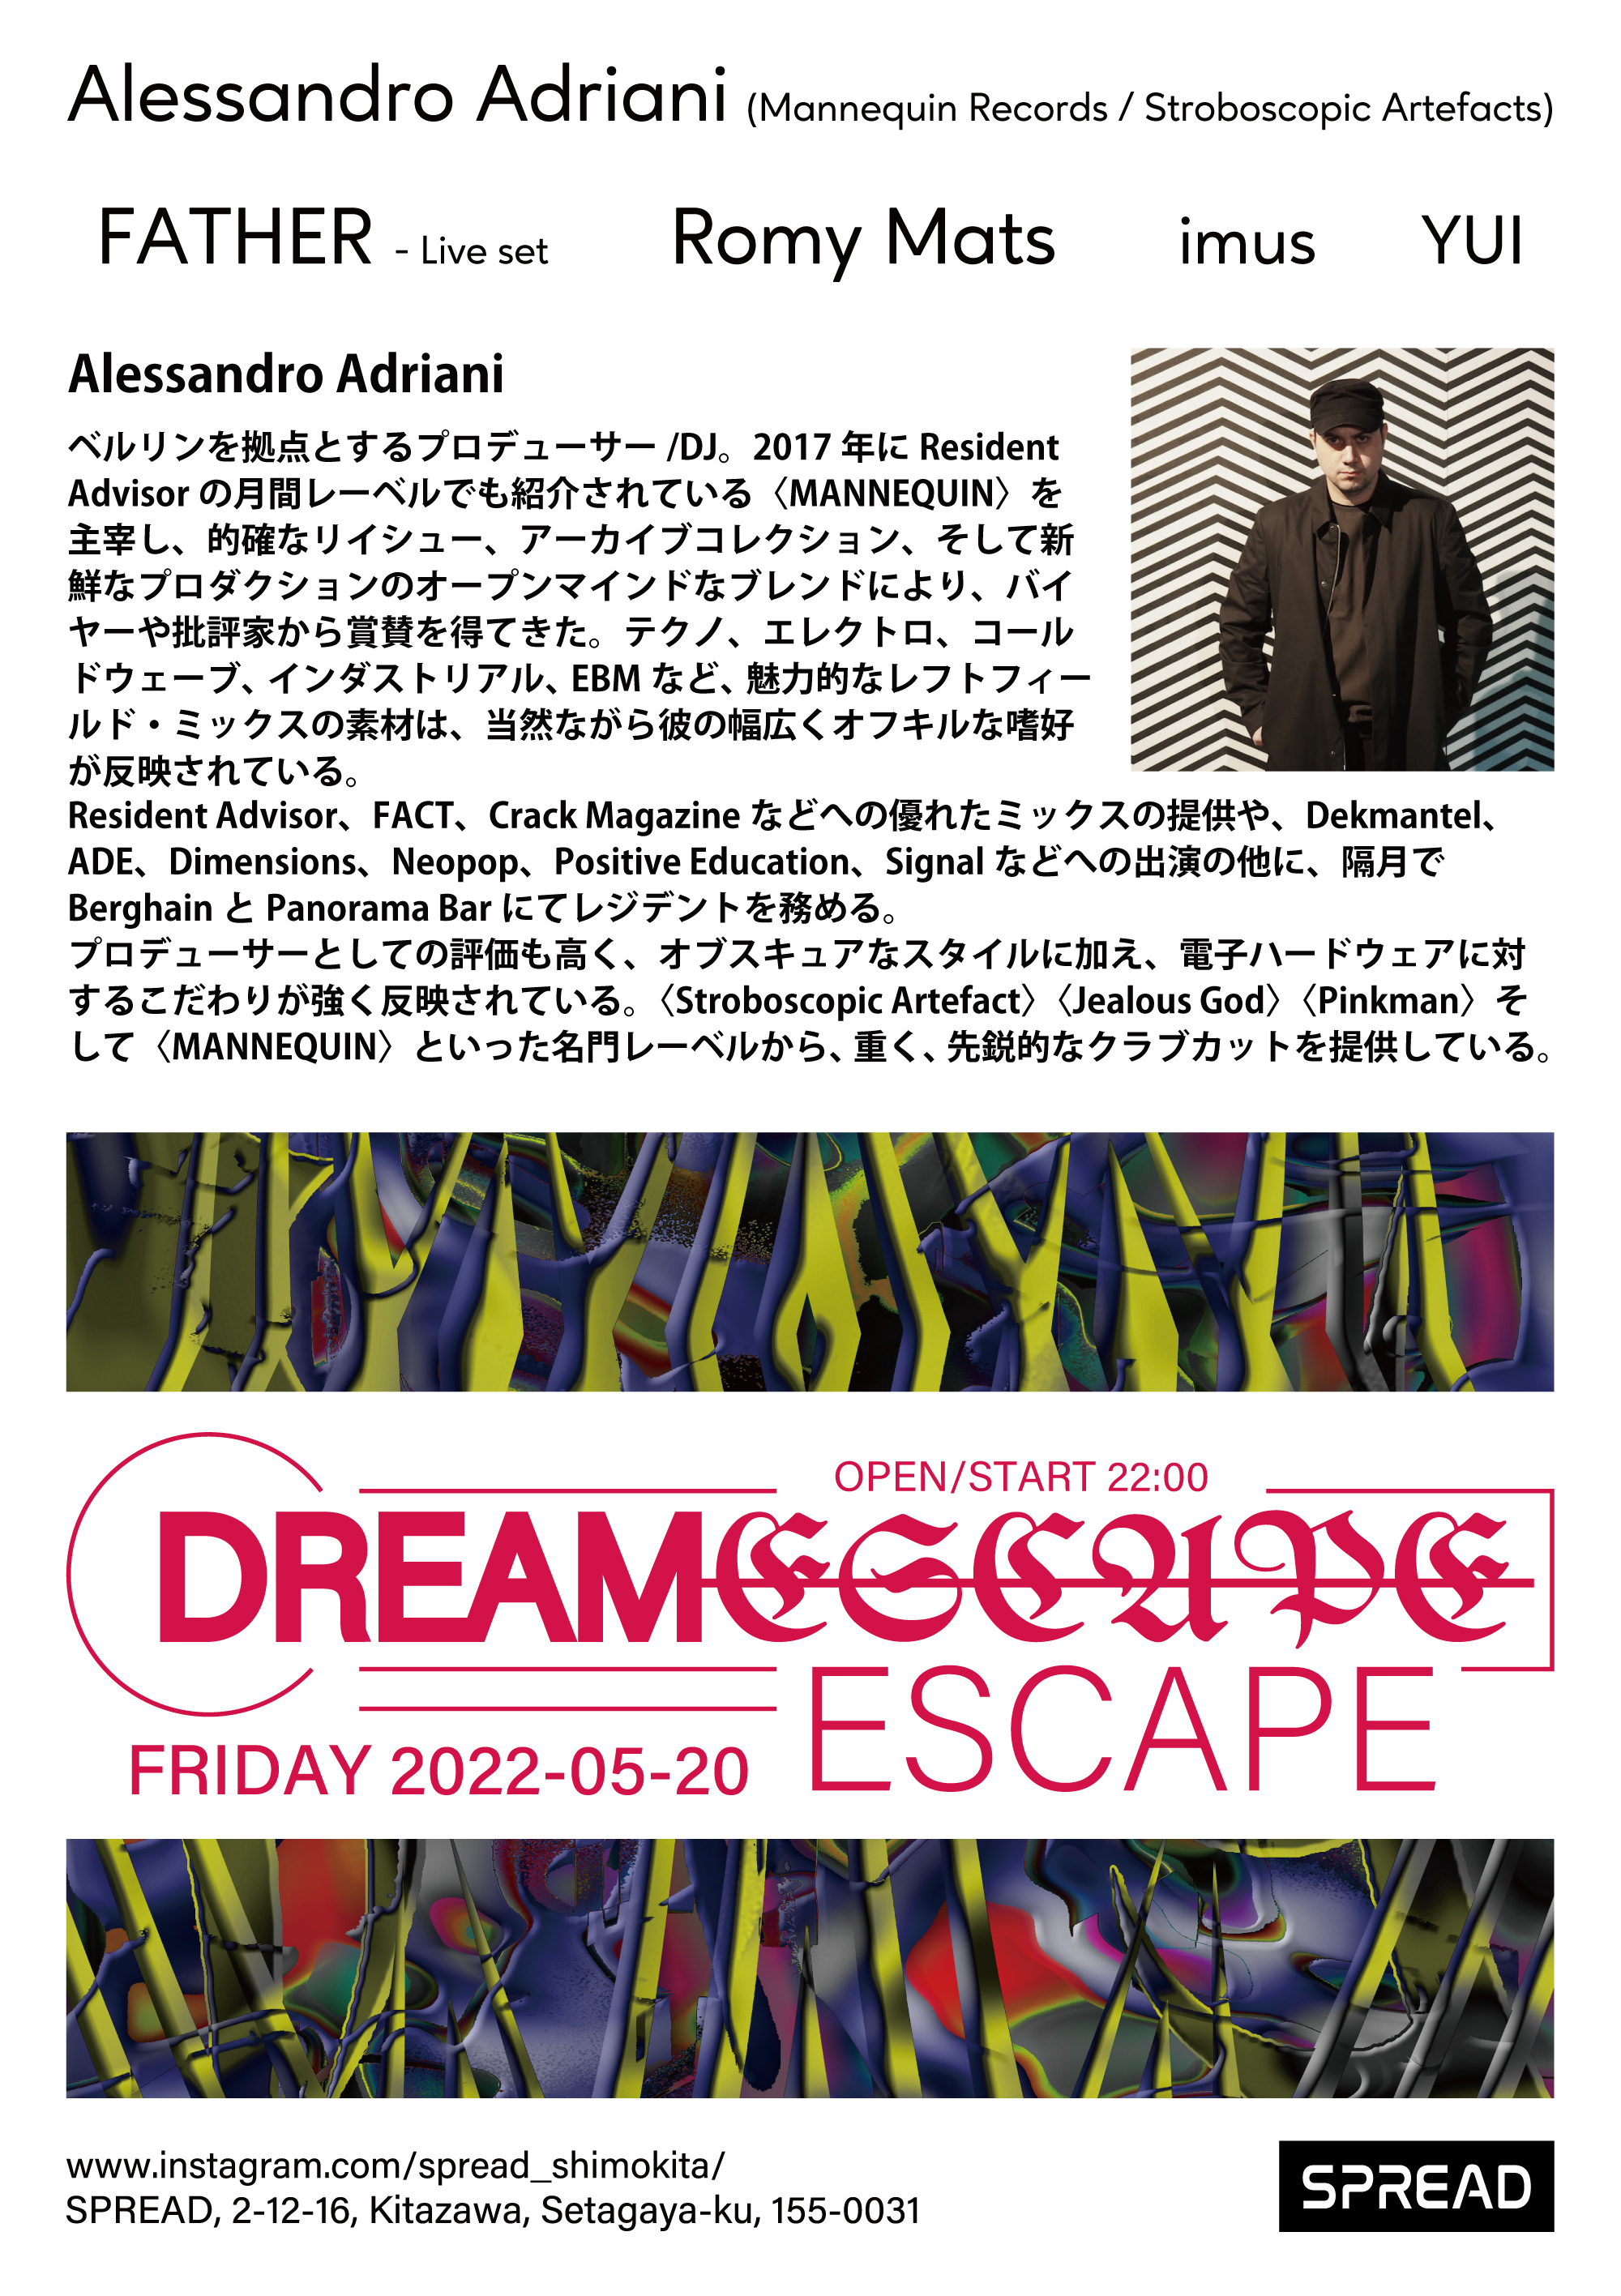 DREAMESCAPE feat. Alessandro Adriani (Mannequin Records/Stroboscopic Artefacts) - Flyer back